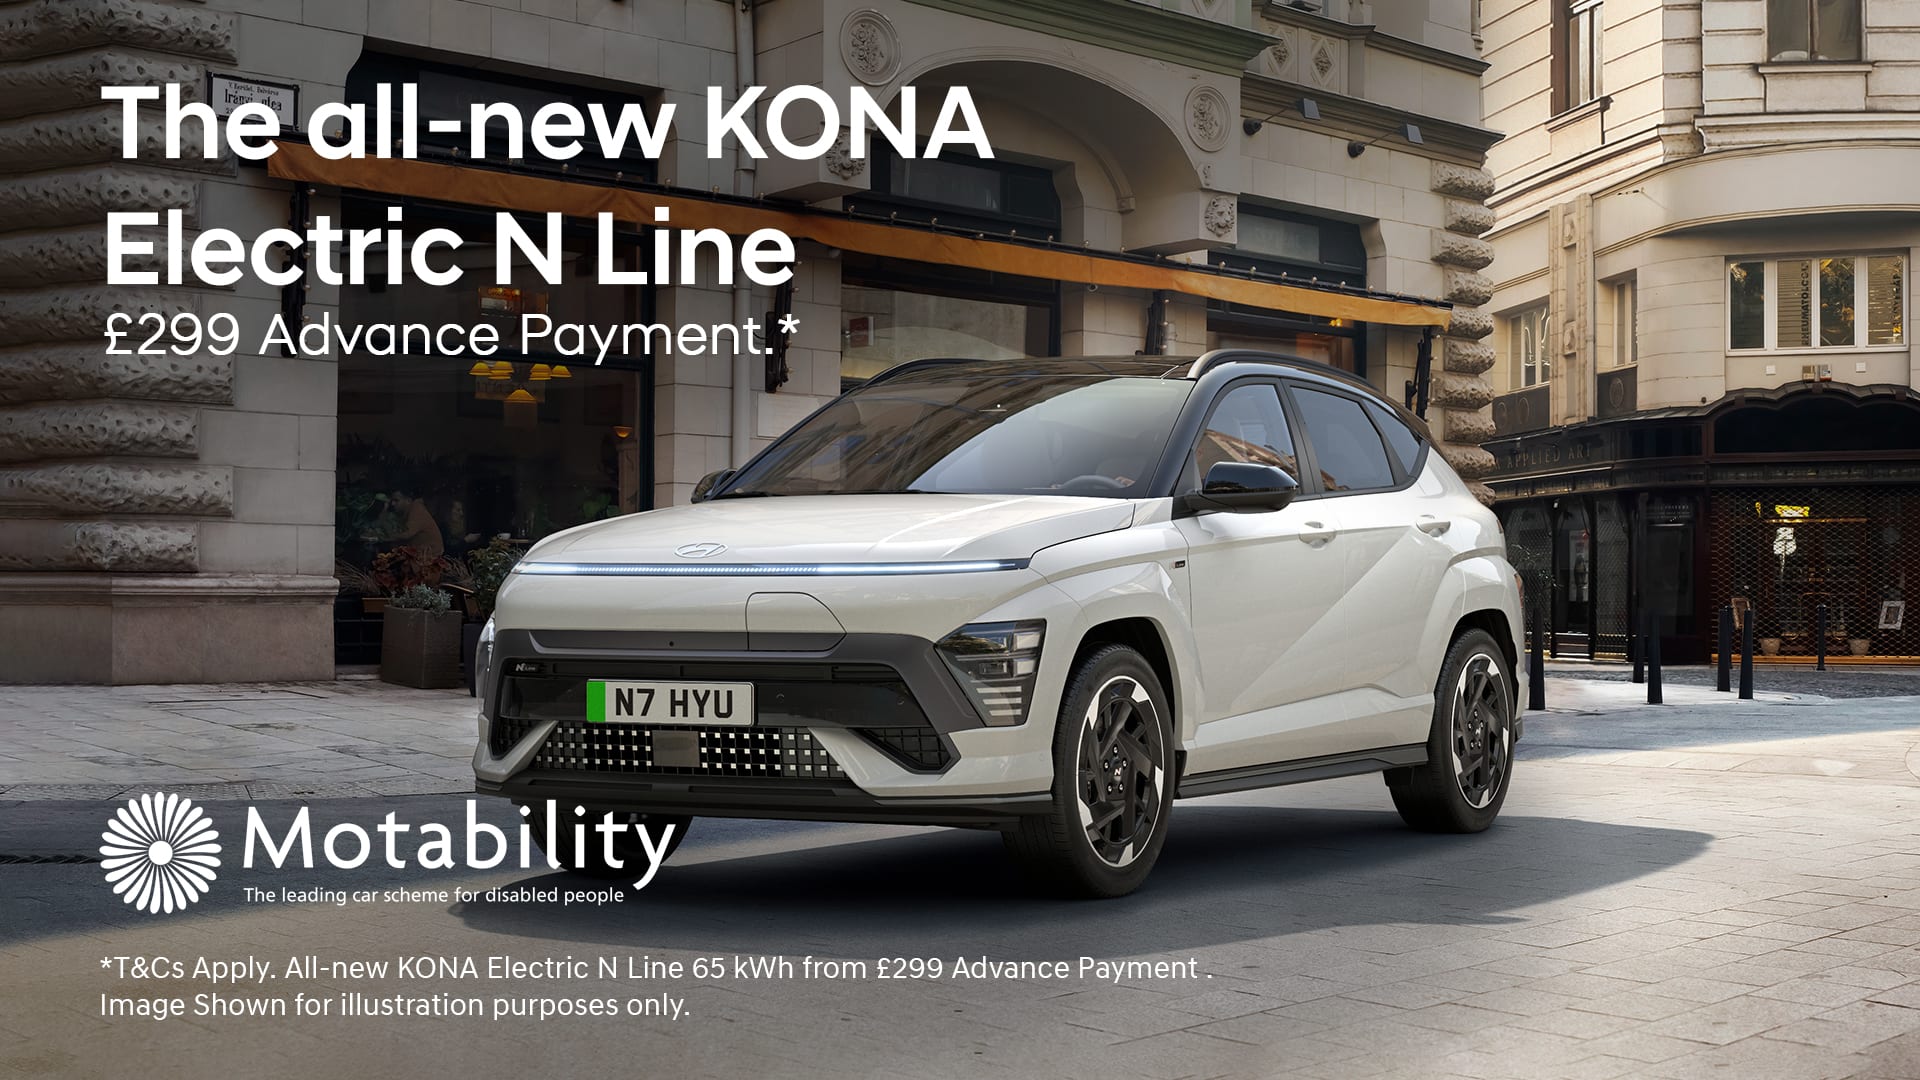 The all-new KONA Electric N Line 